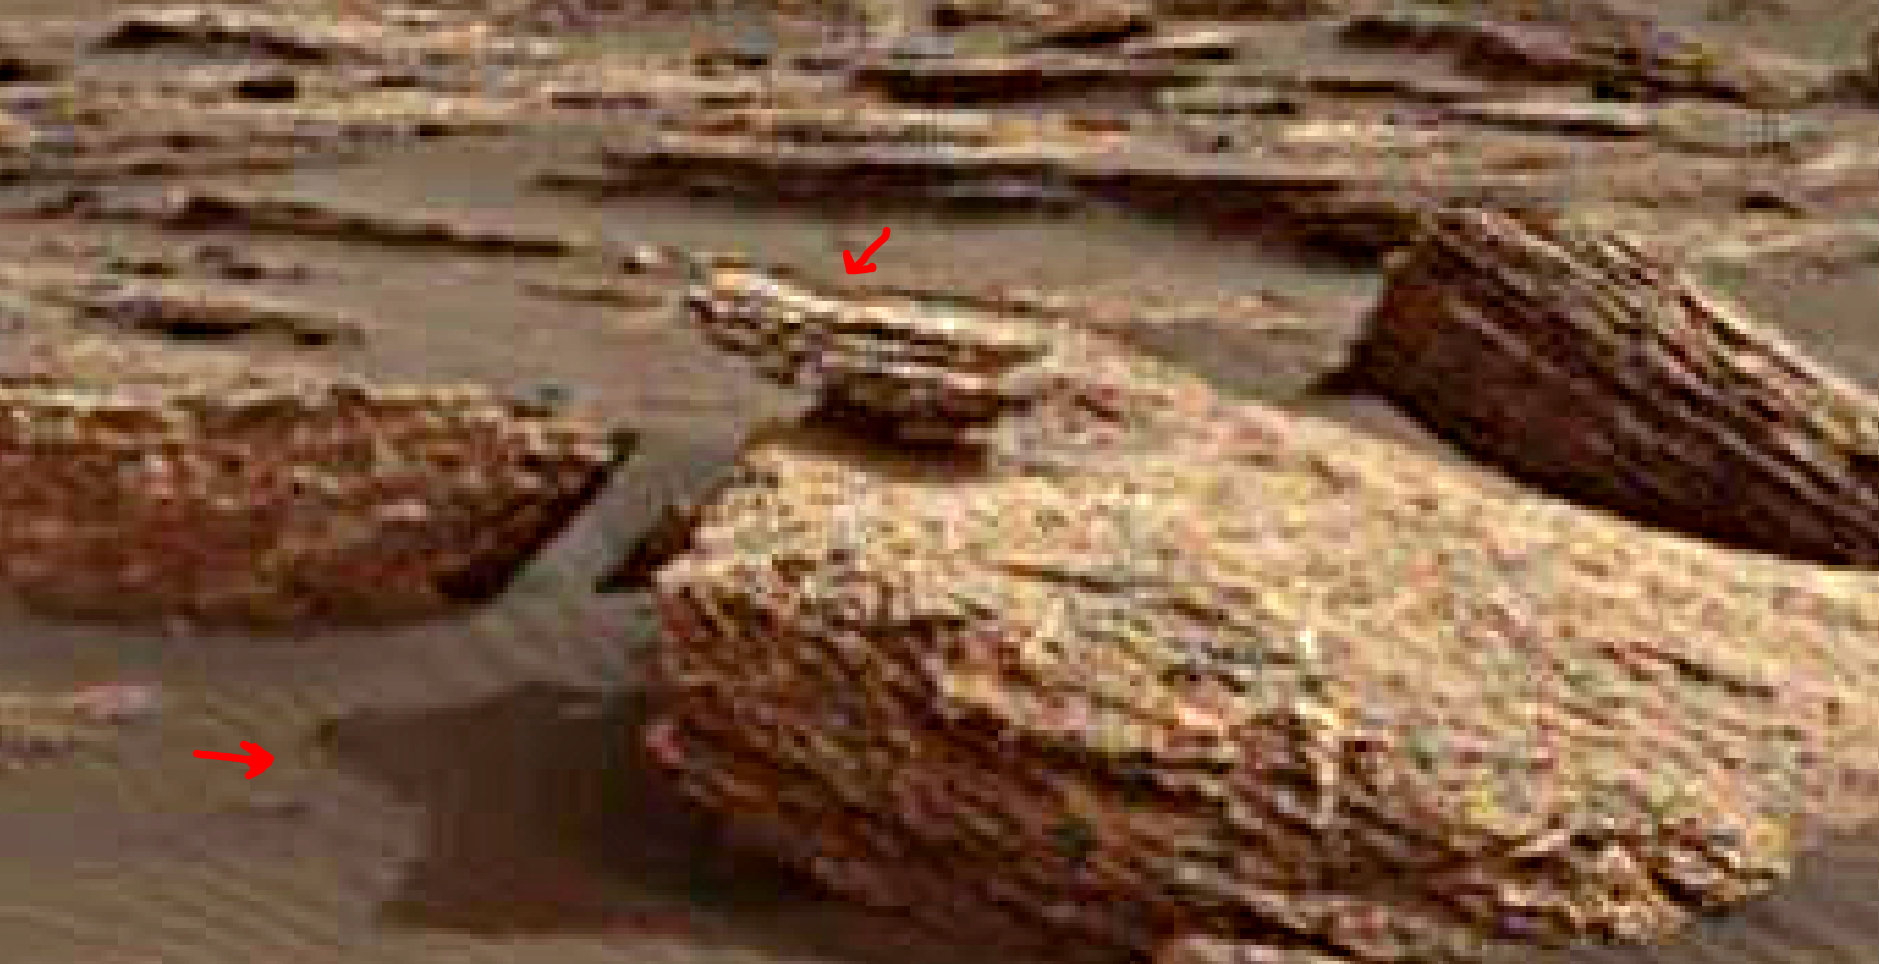 Mars anomalies - bird sculpture